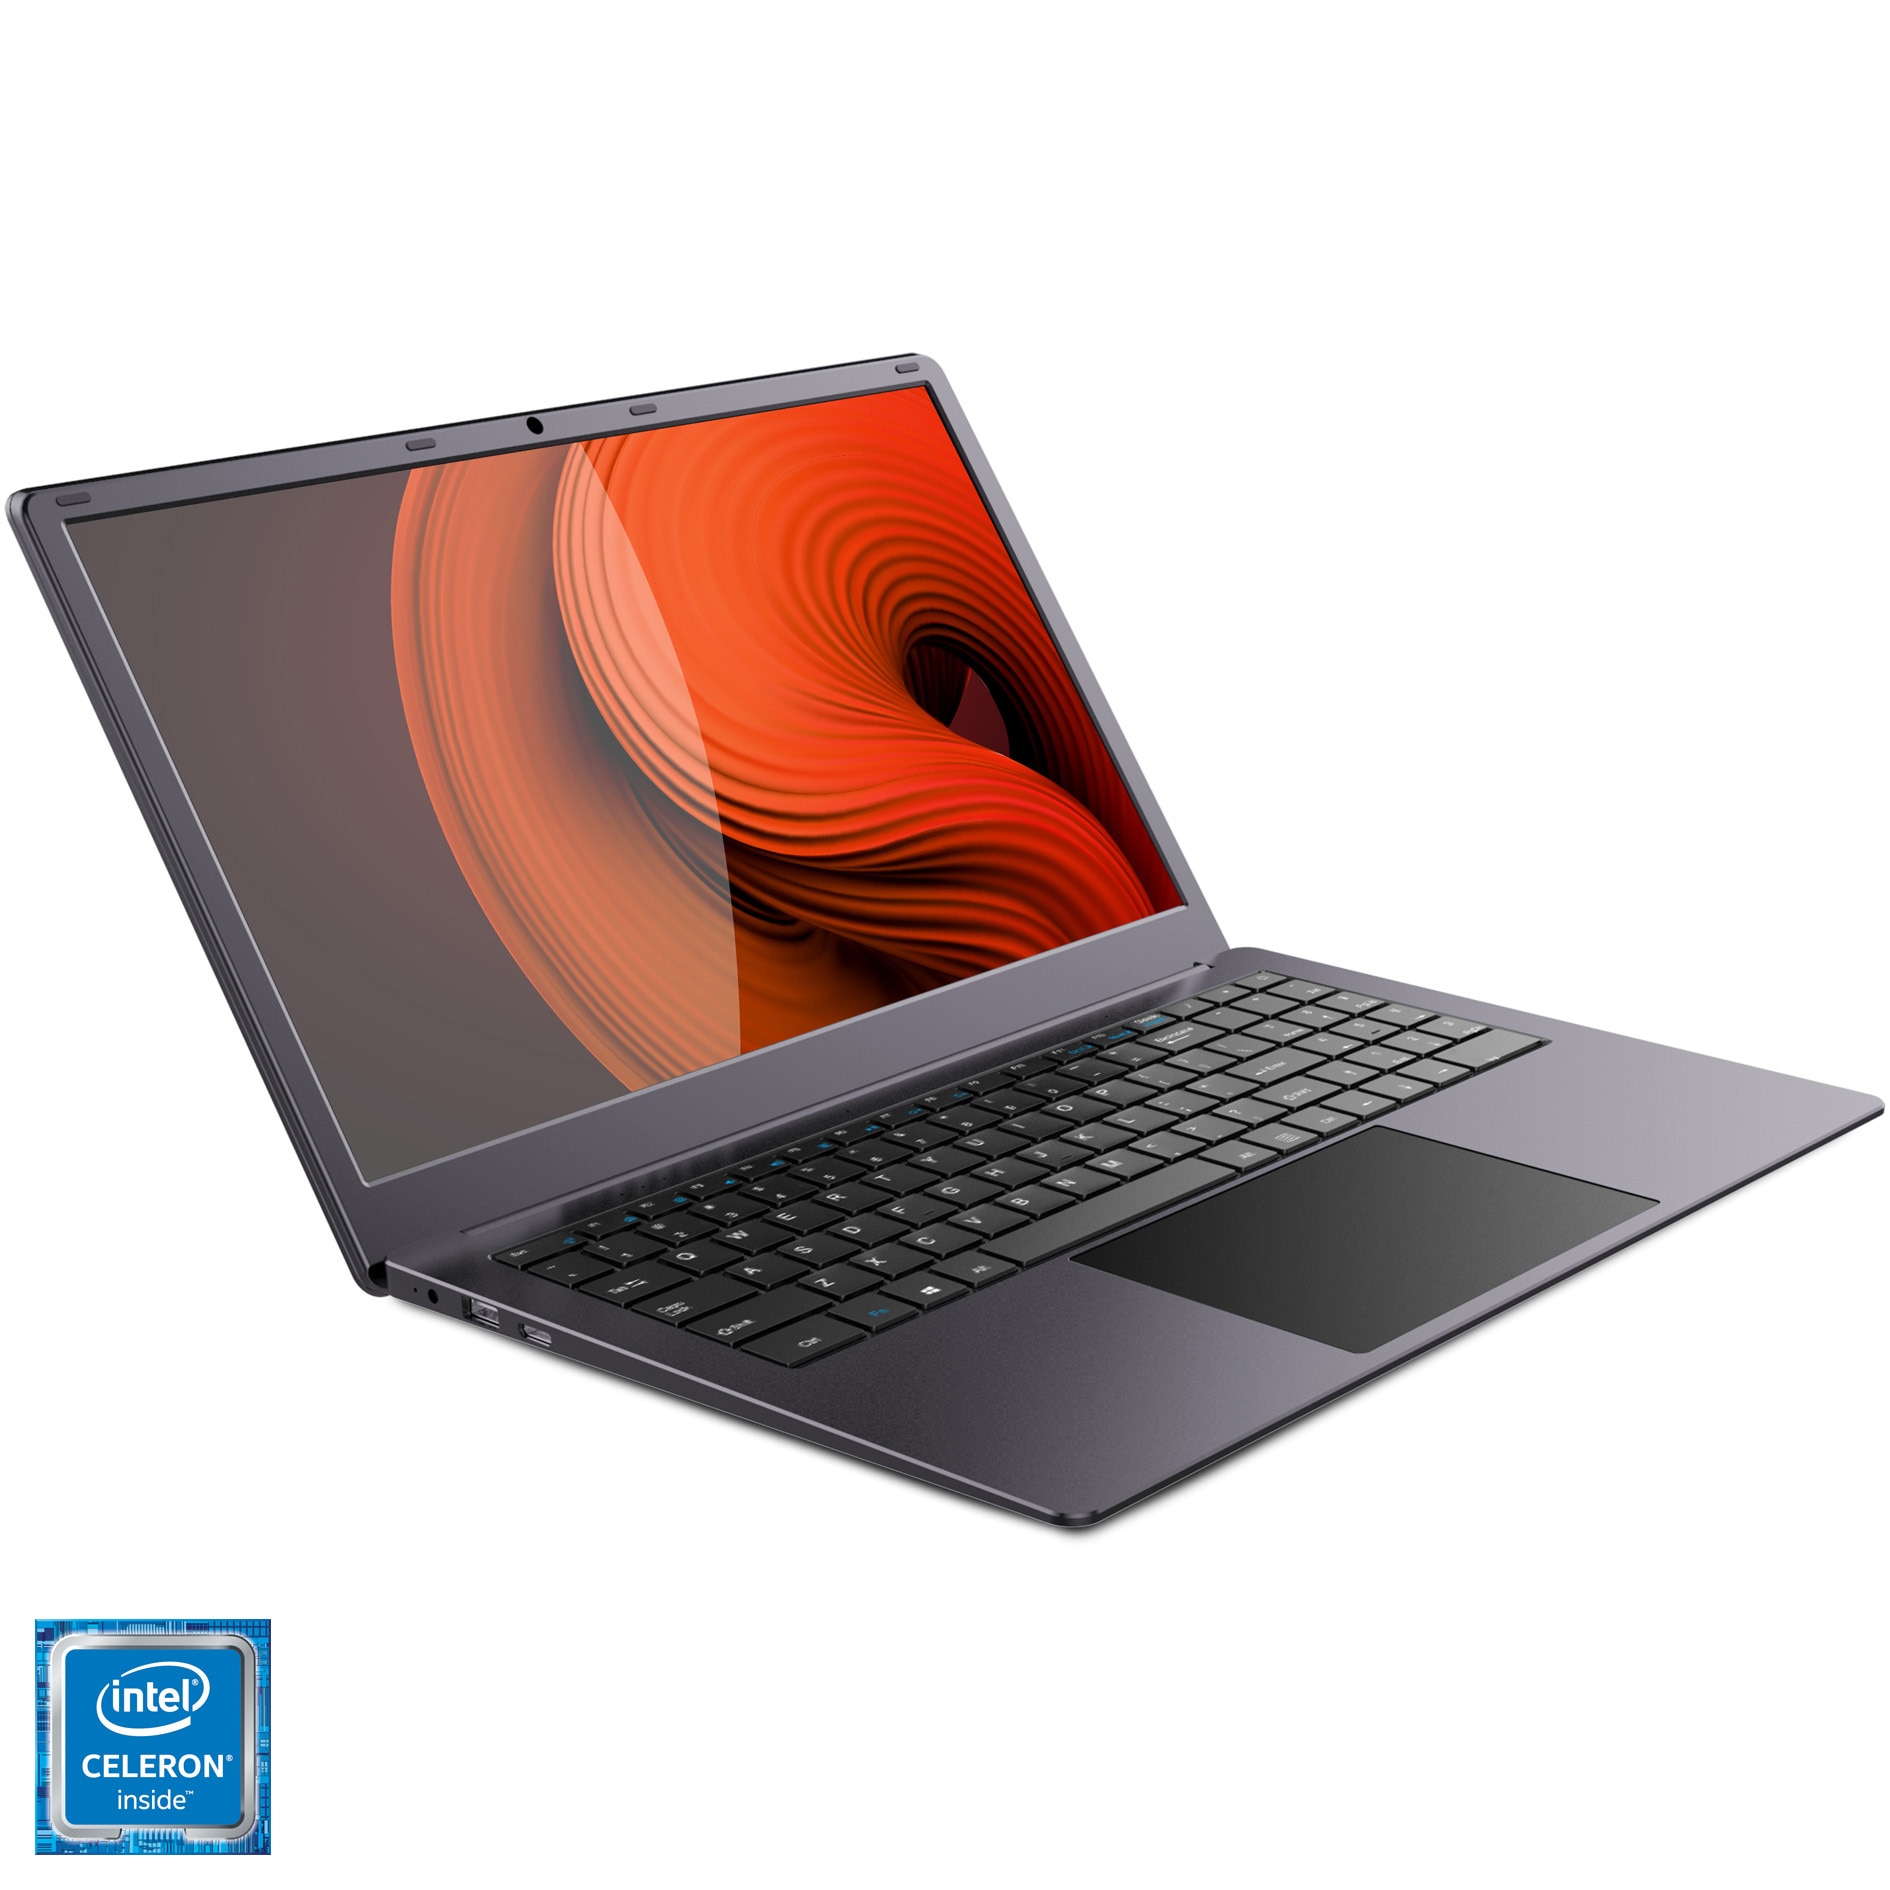 sanity dishonest electrode Altex Laptop 2 In 1 Linux 🔥 CUMPĂRĂ ONLINE